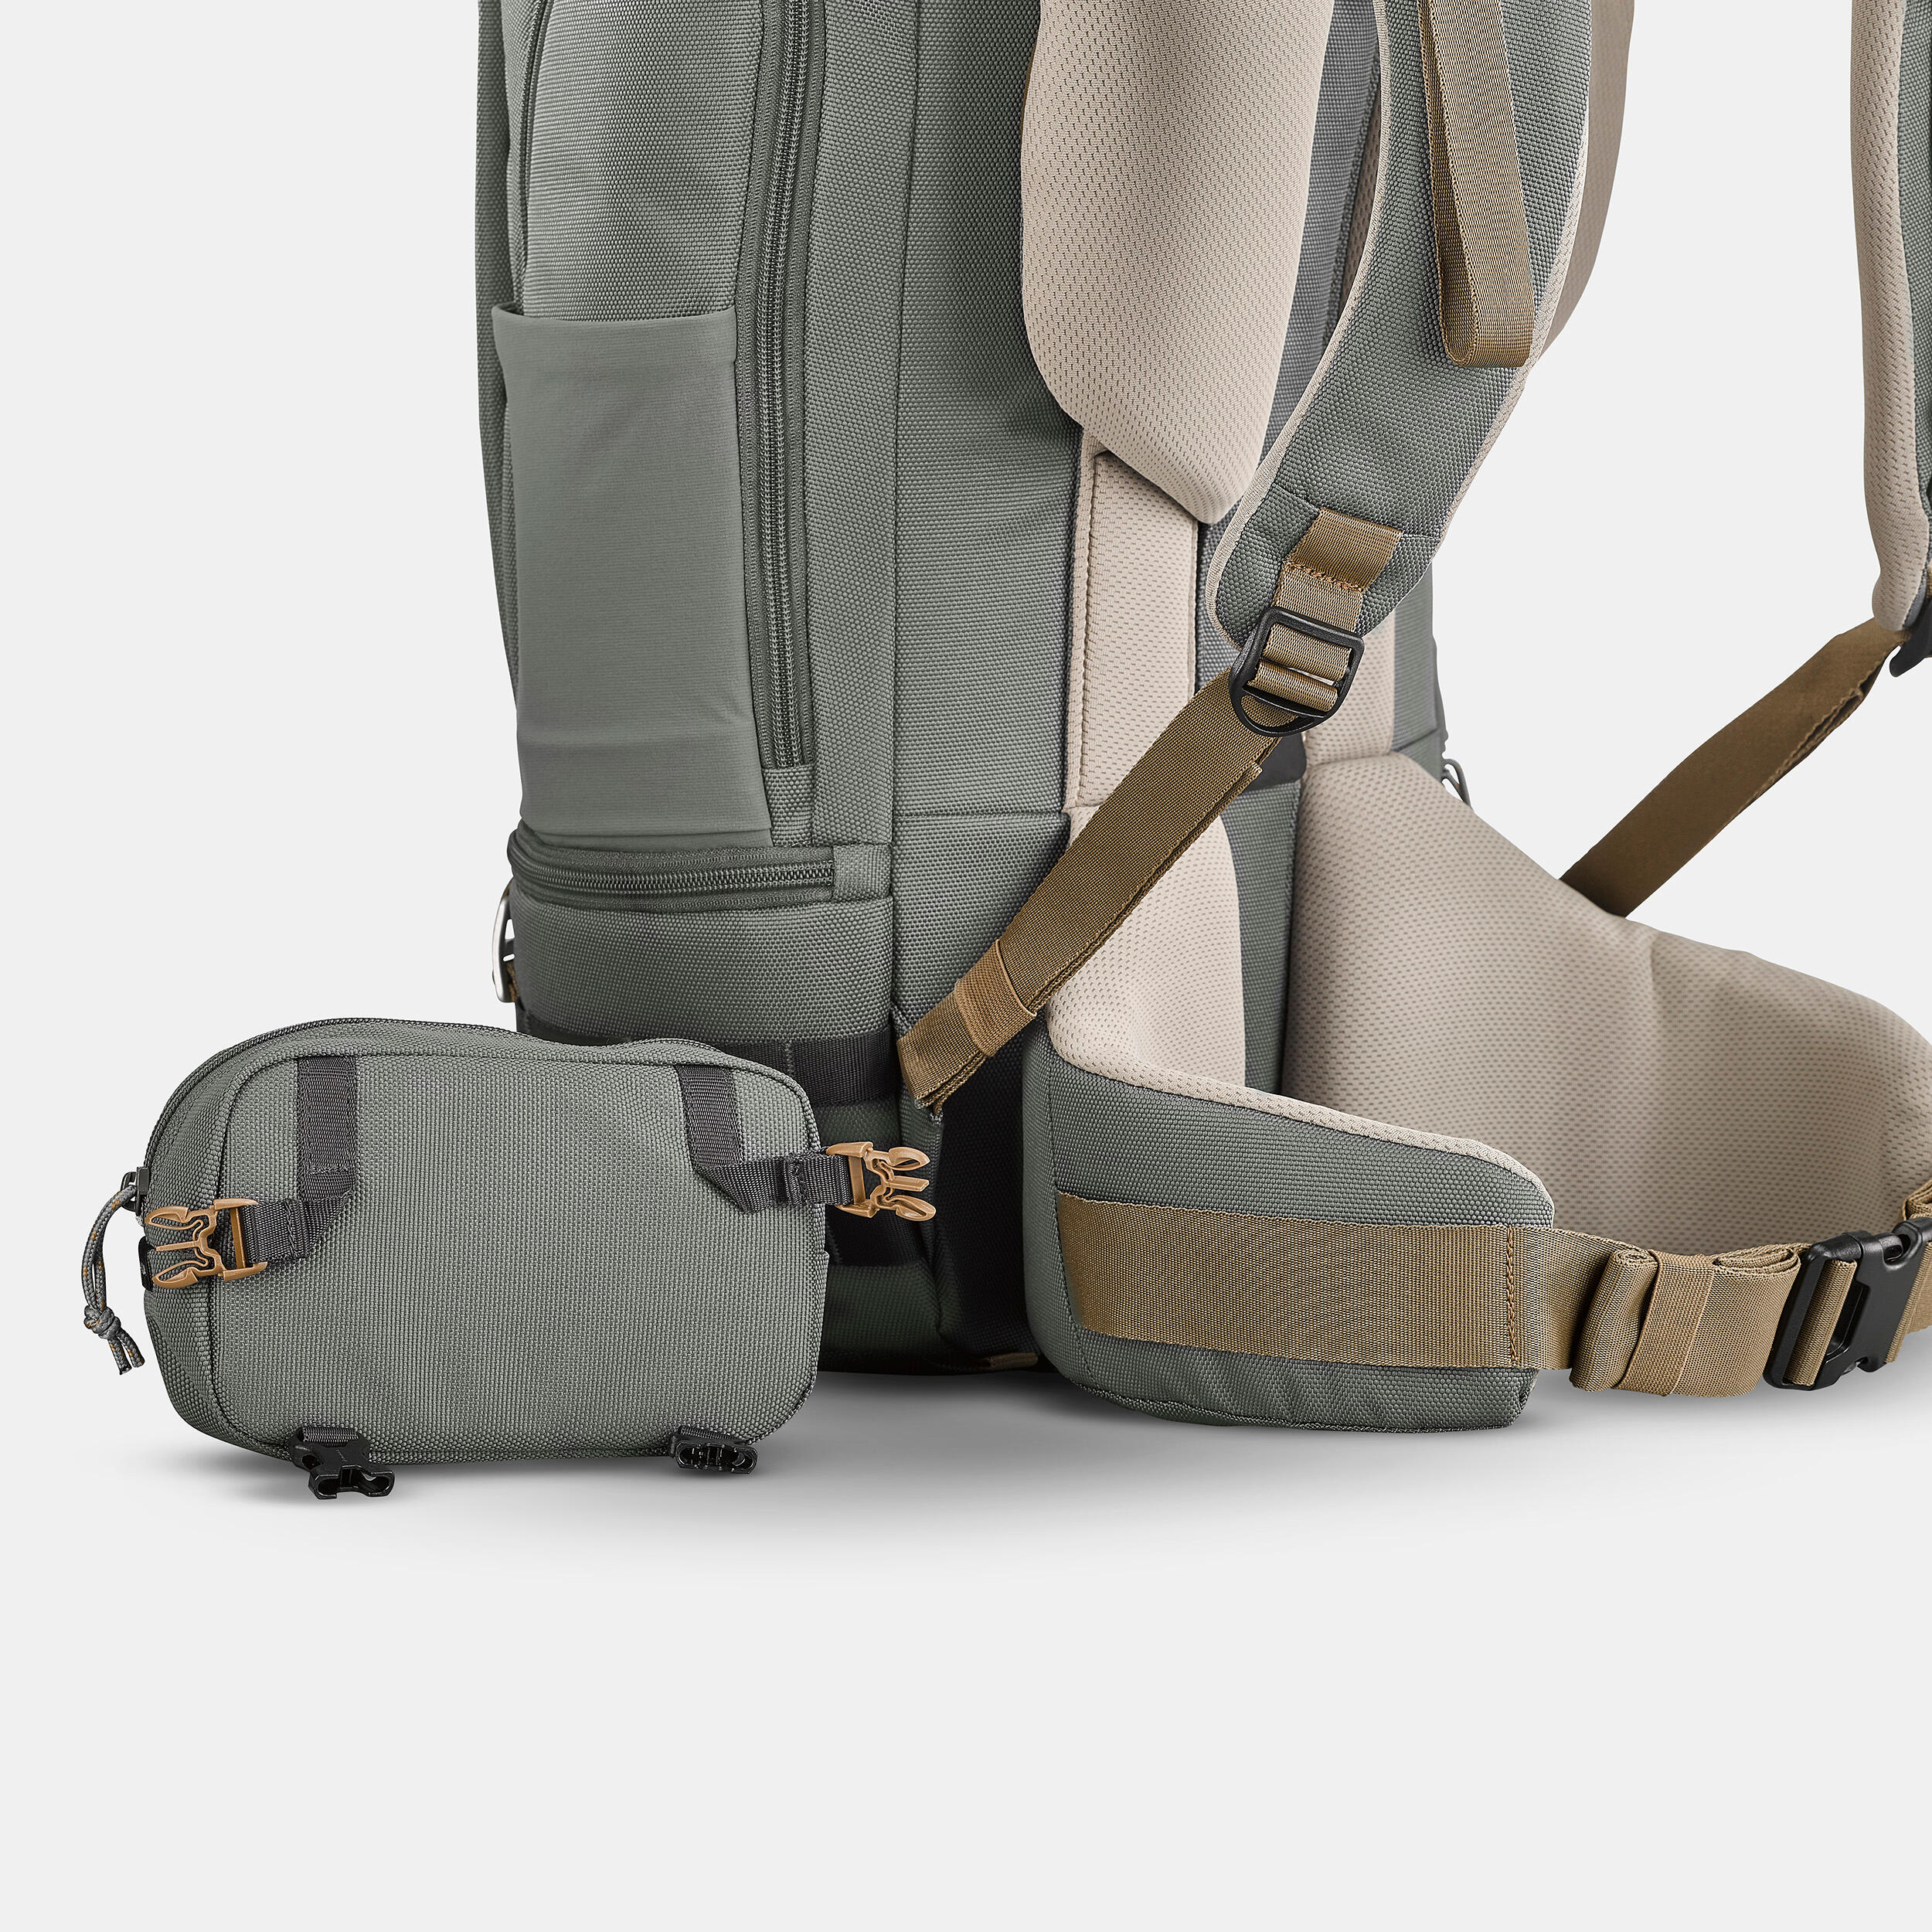 Hiking backpack 25L - NH Arpenaz 900 15/18